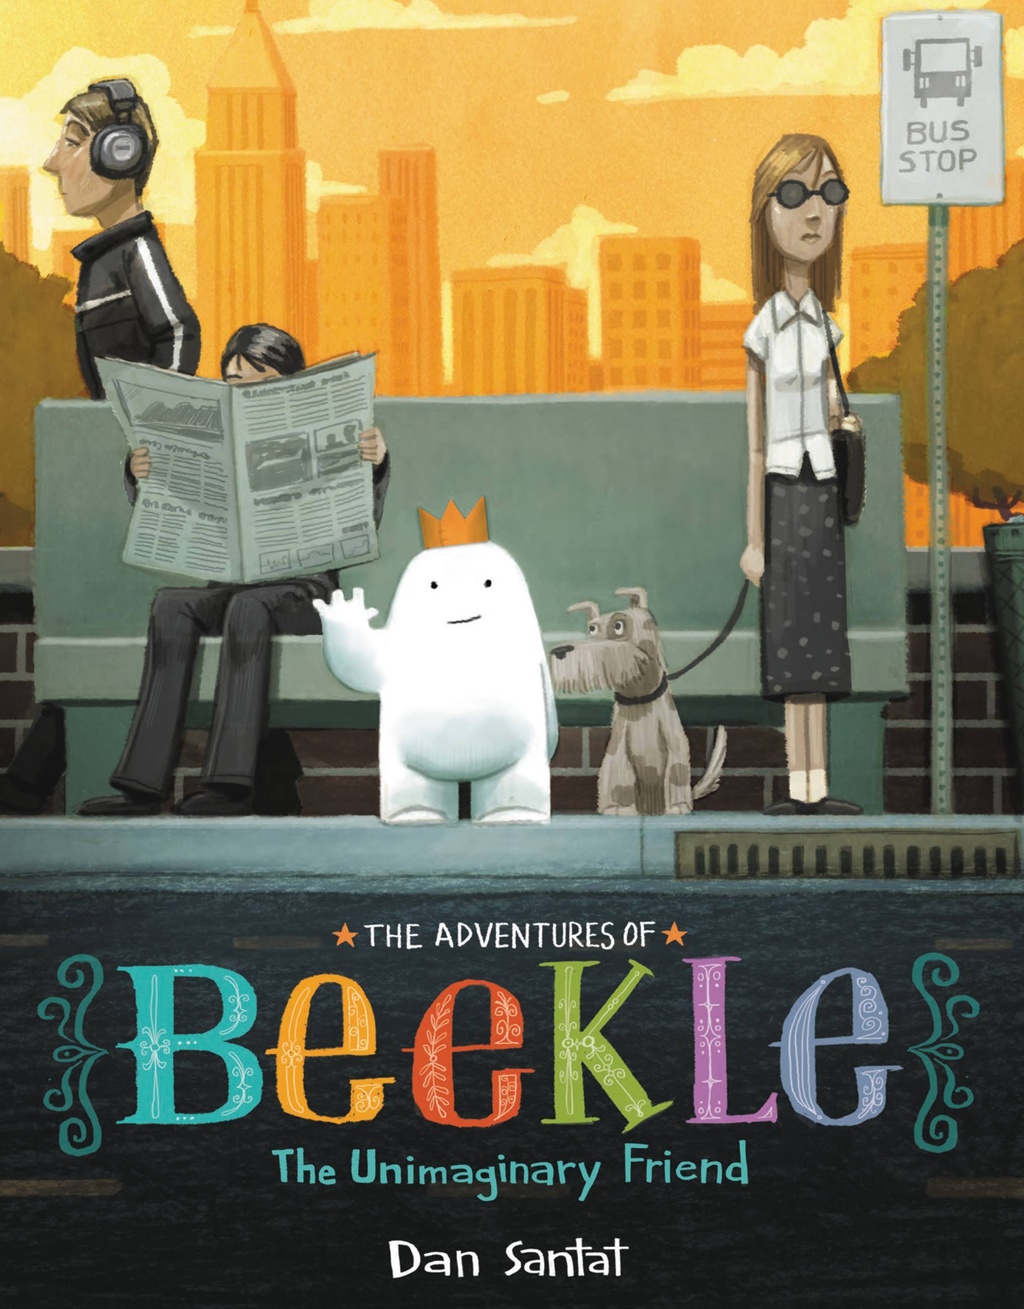 Dan Santat, The Adventures of Beekle, The Unimaginary Friend (2014)